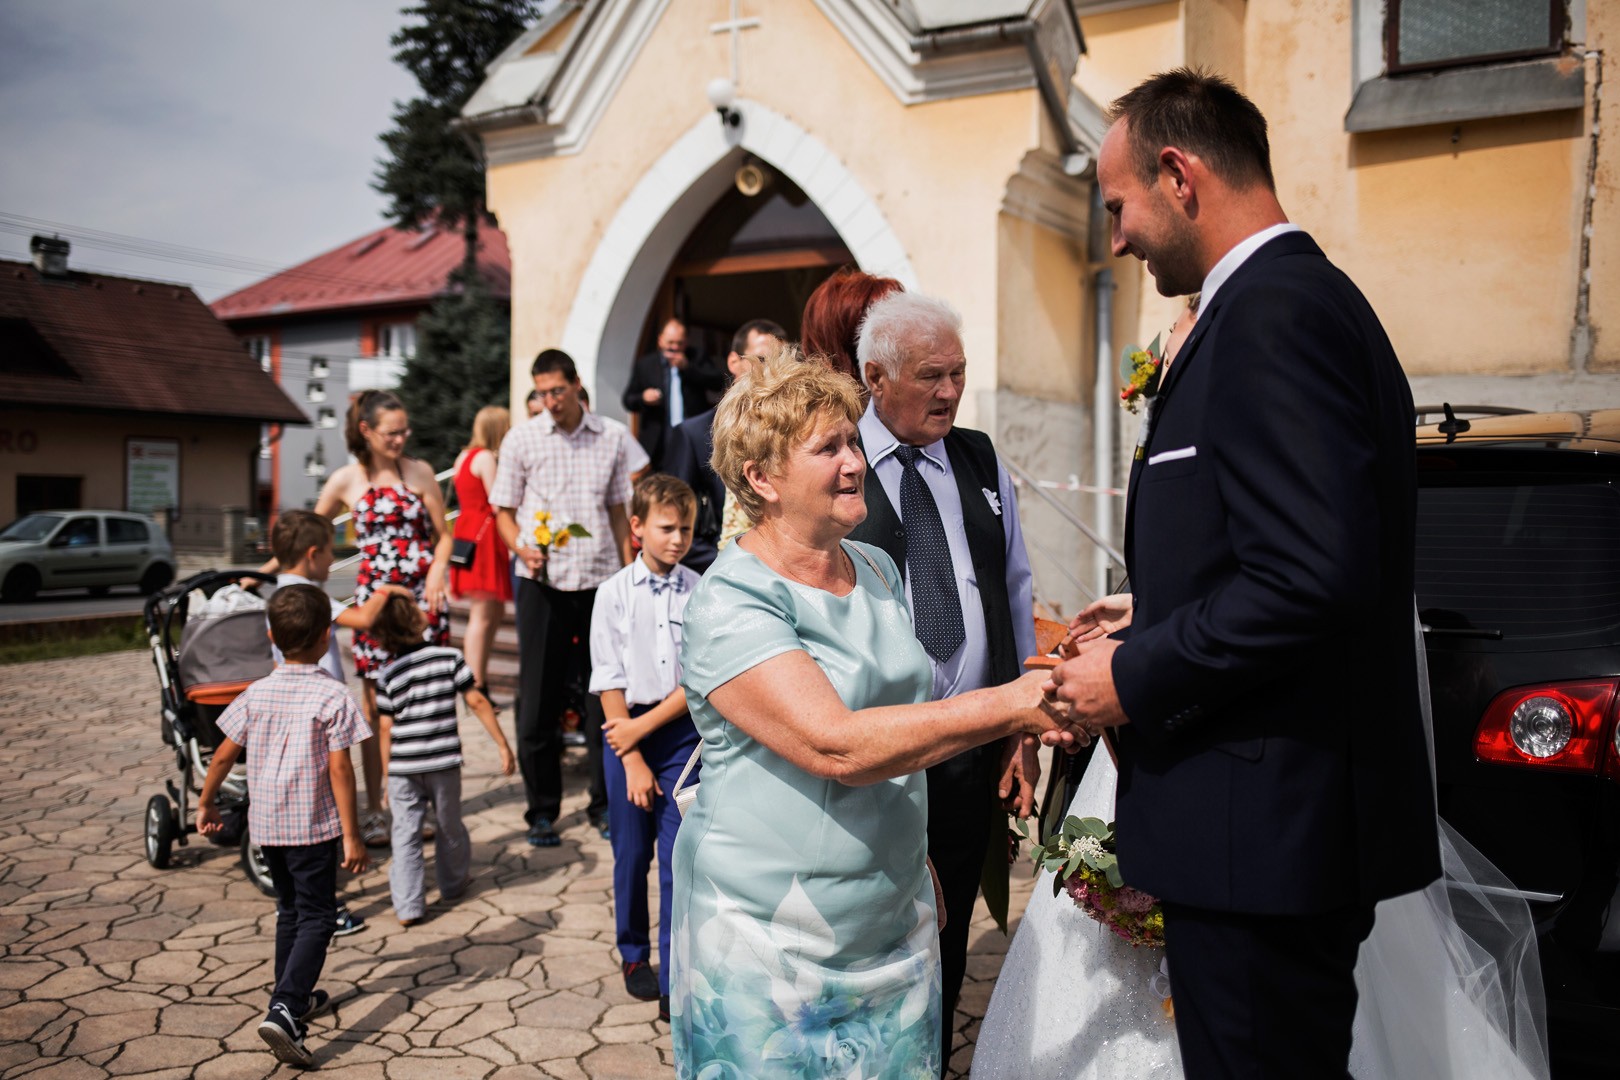 Wedding photos from the wedding day of Miška and Stanka. - 0352.jpg